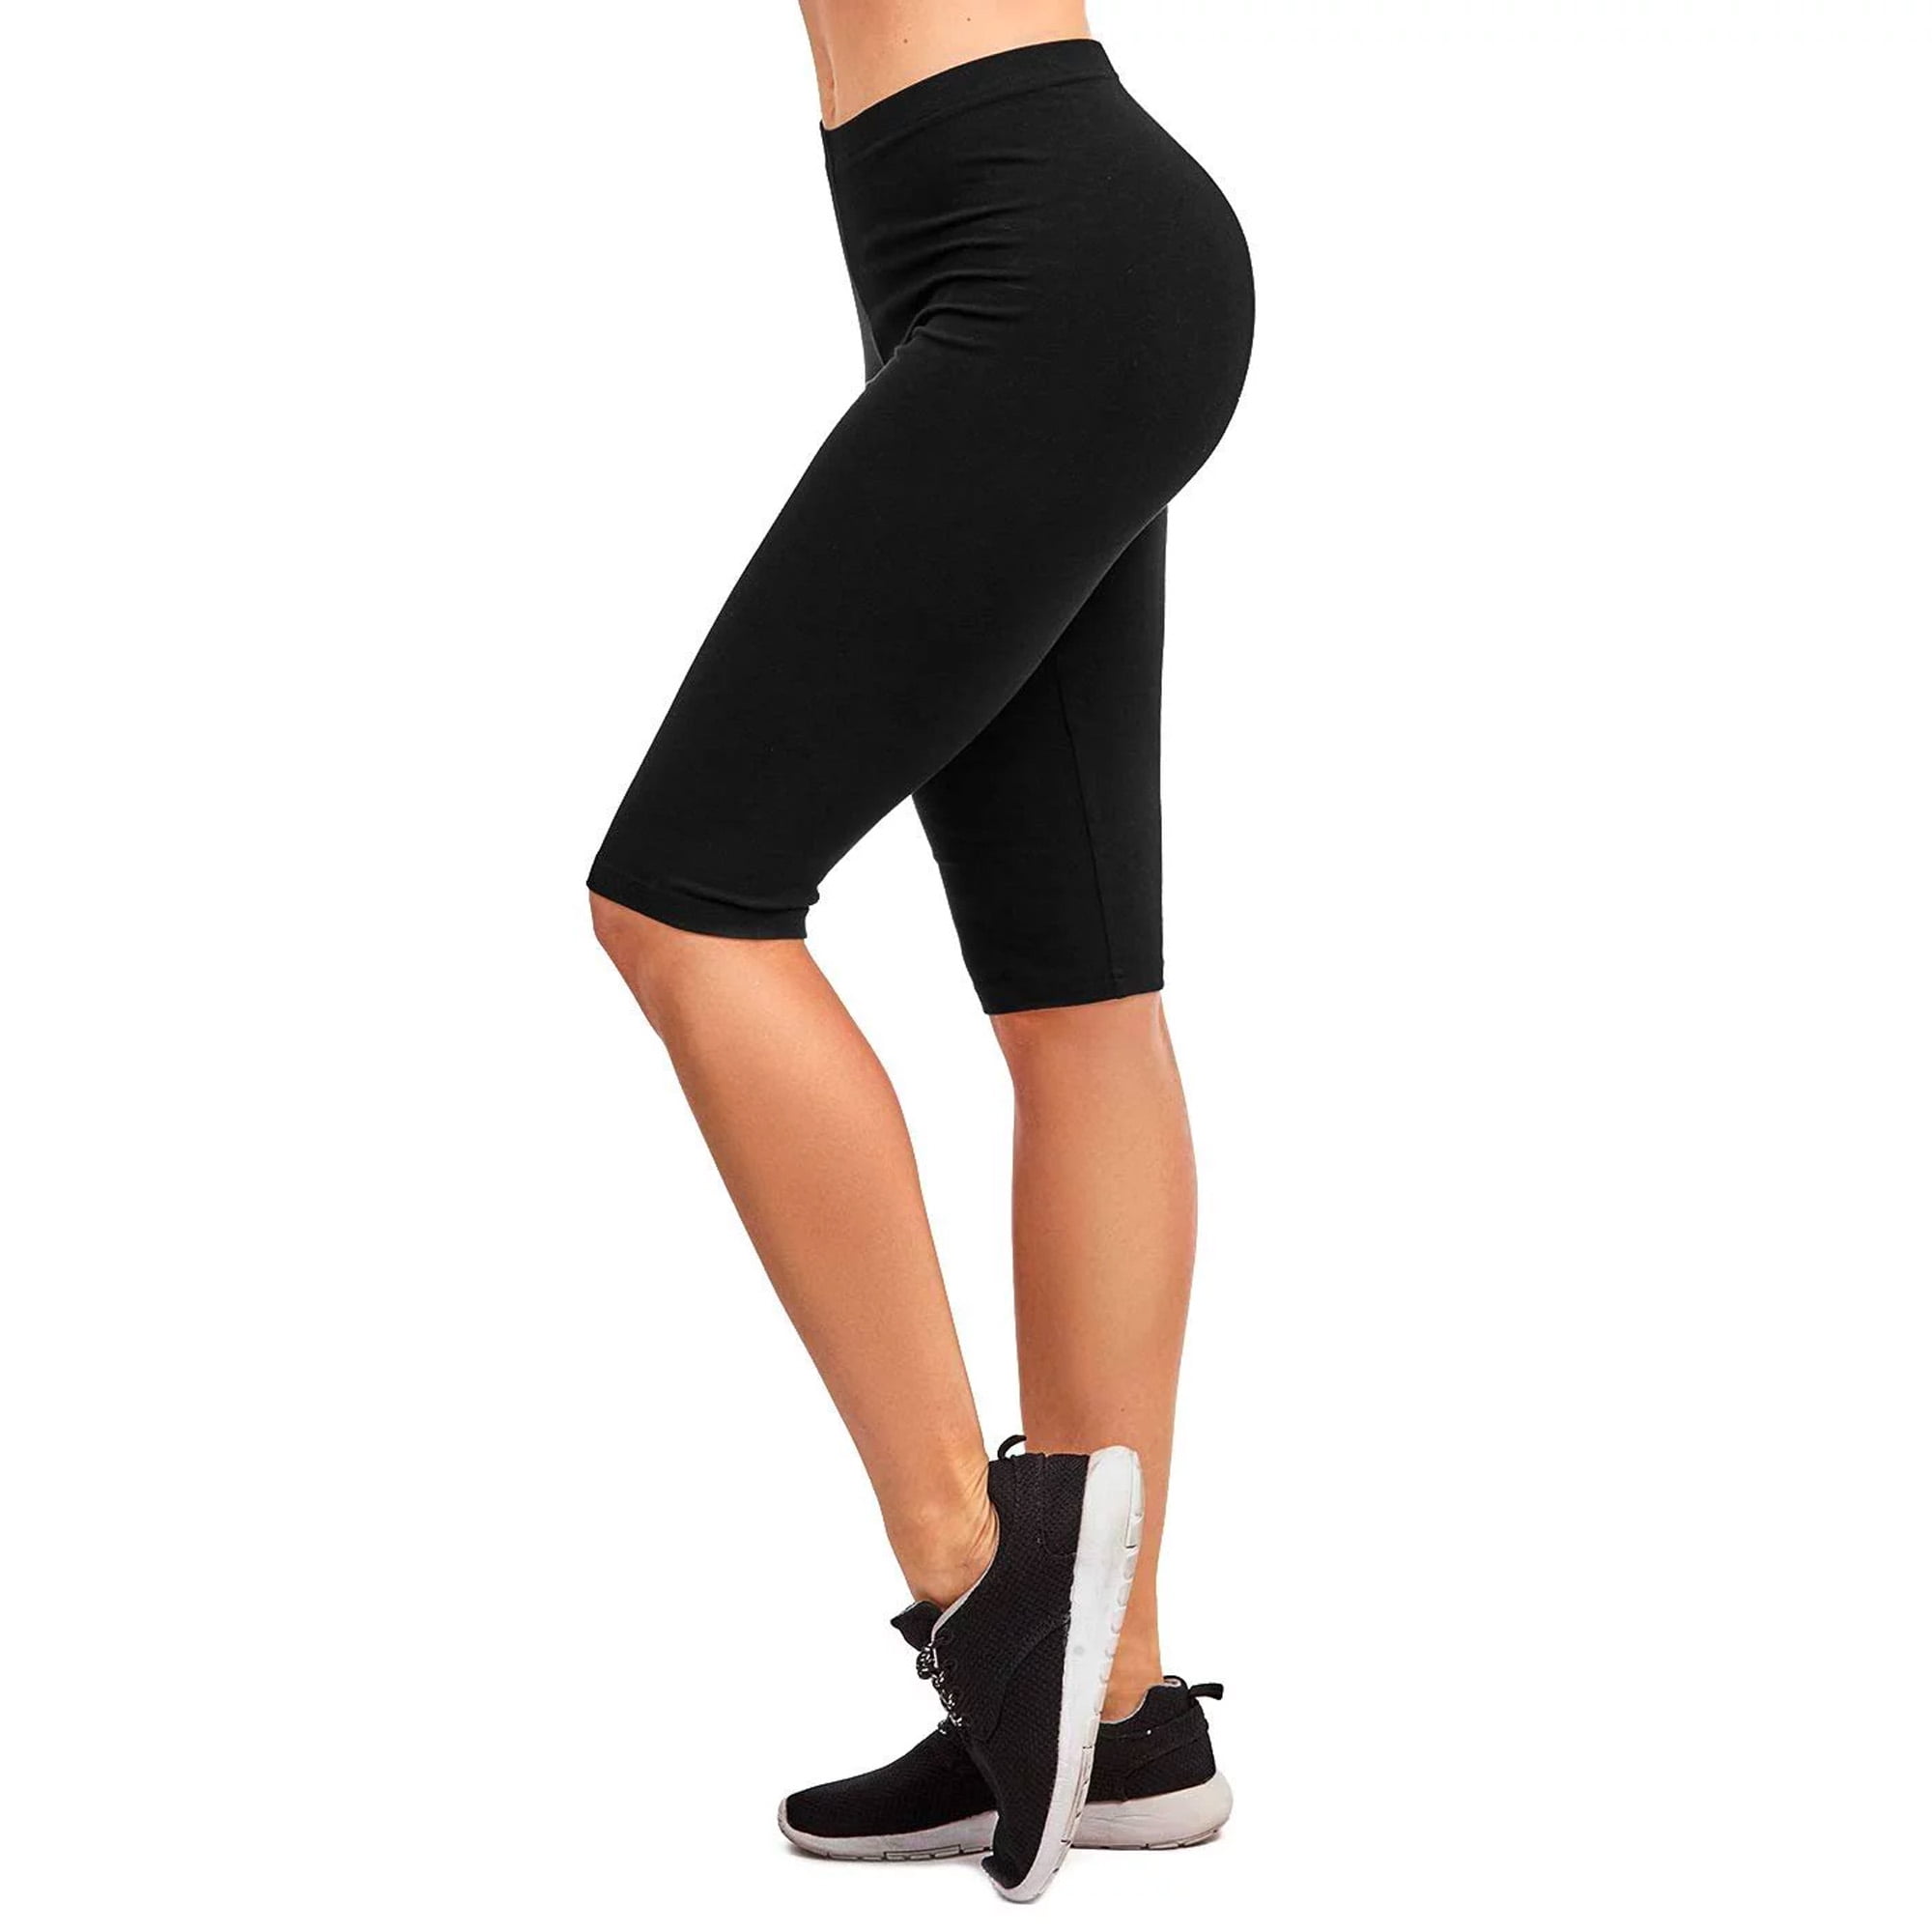 DailyWear Womens Solid Knee Length Short Yoga Cotton Leggings Black, Medium